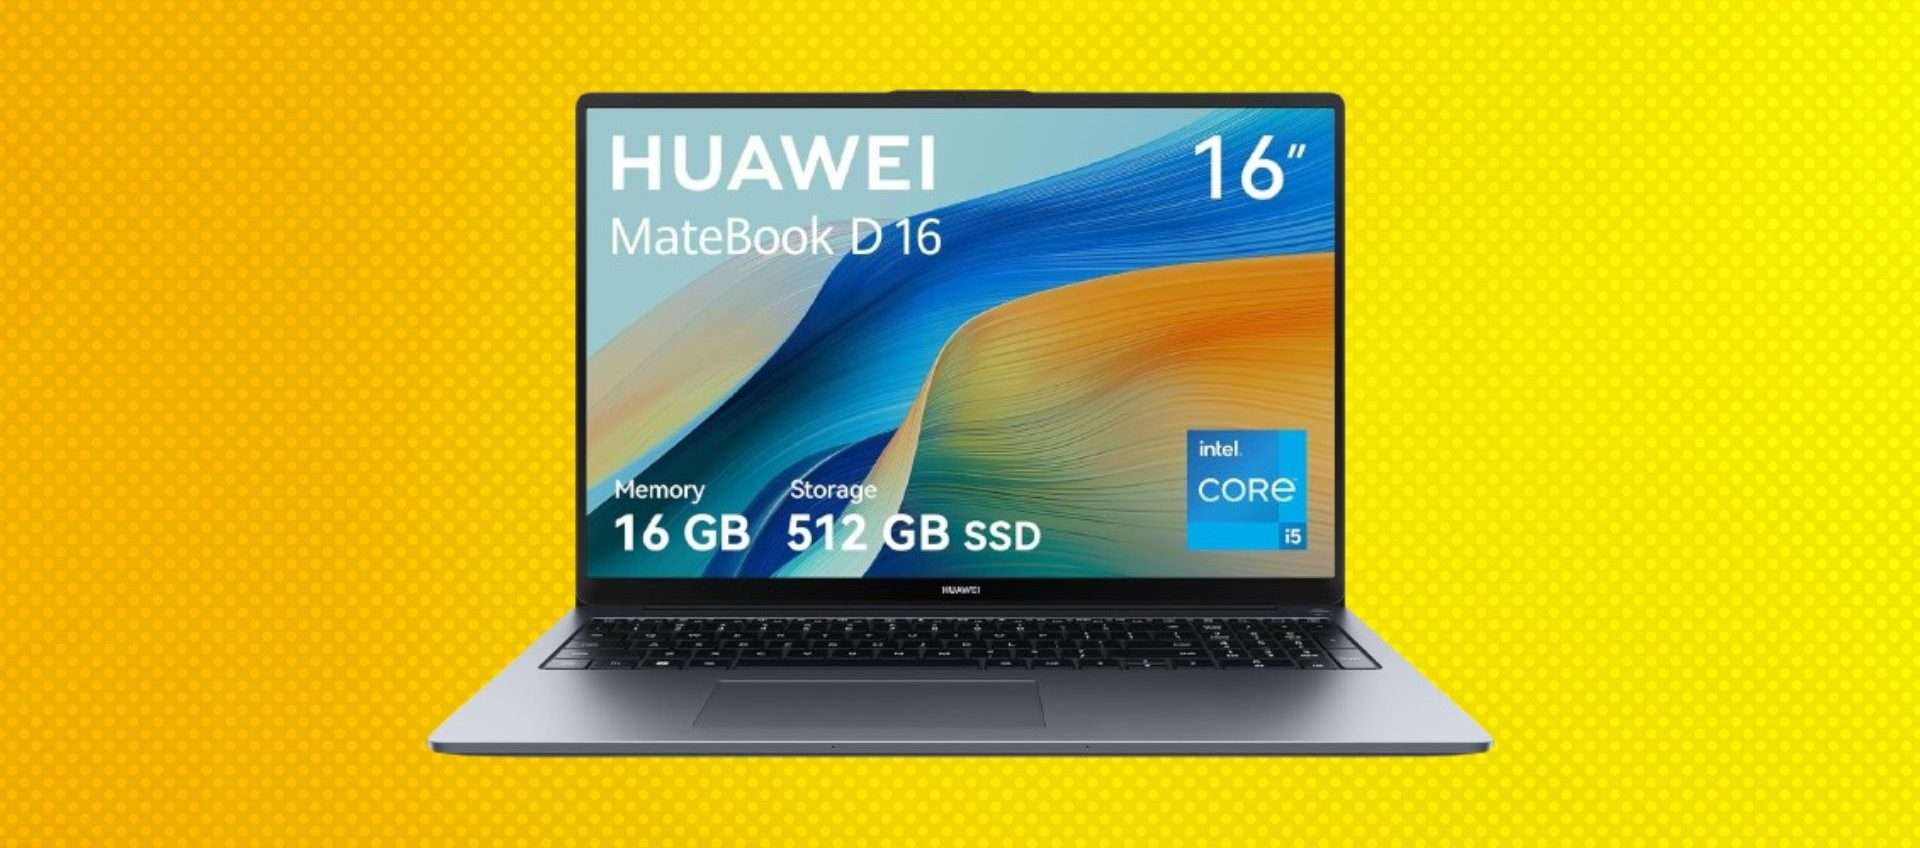 Huawei MateBook D 16, offerta bomba: su Amazon risparmi 250€